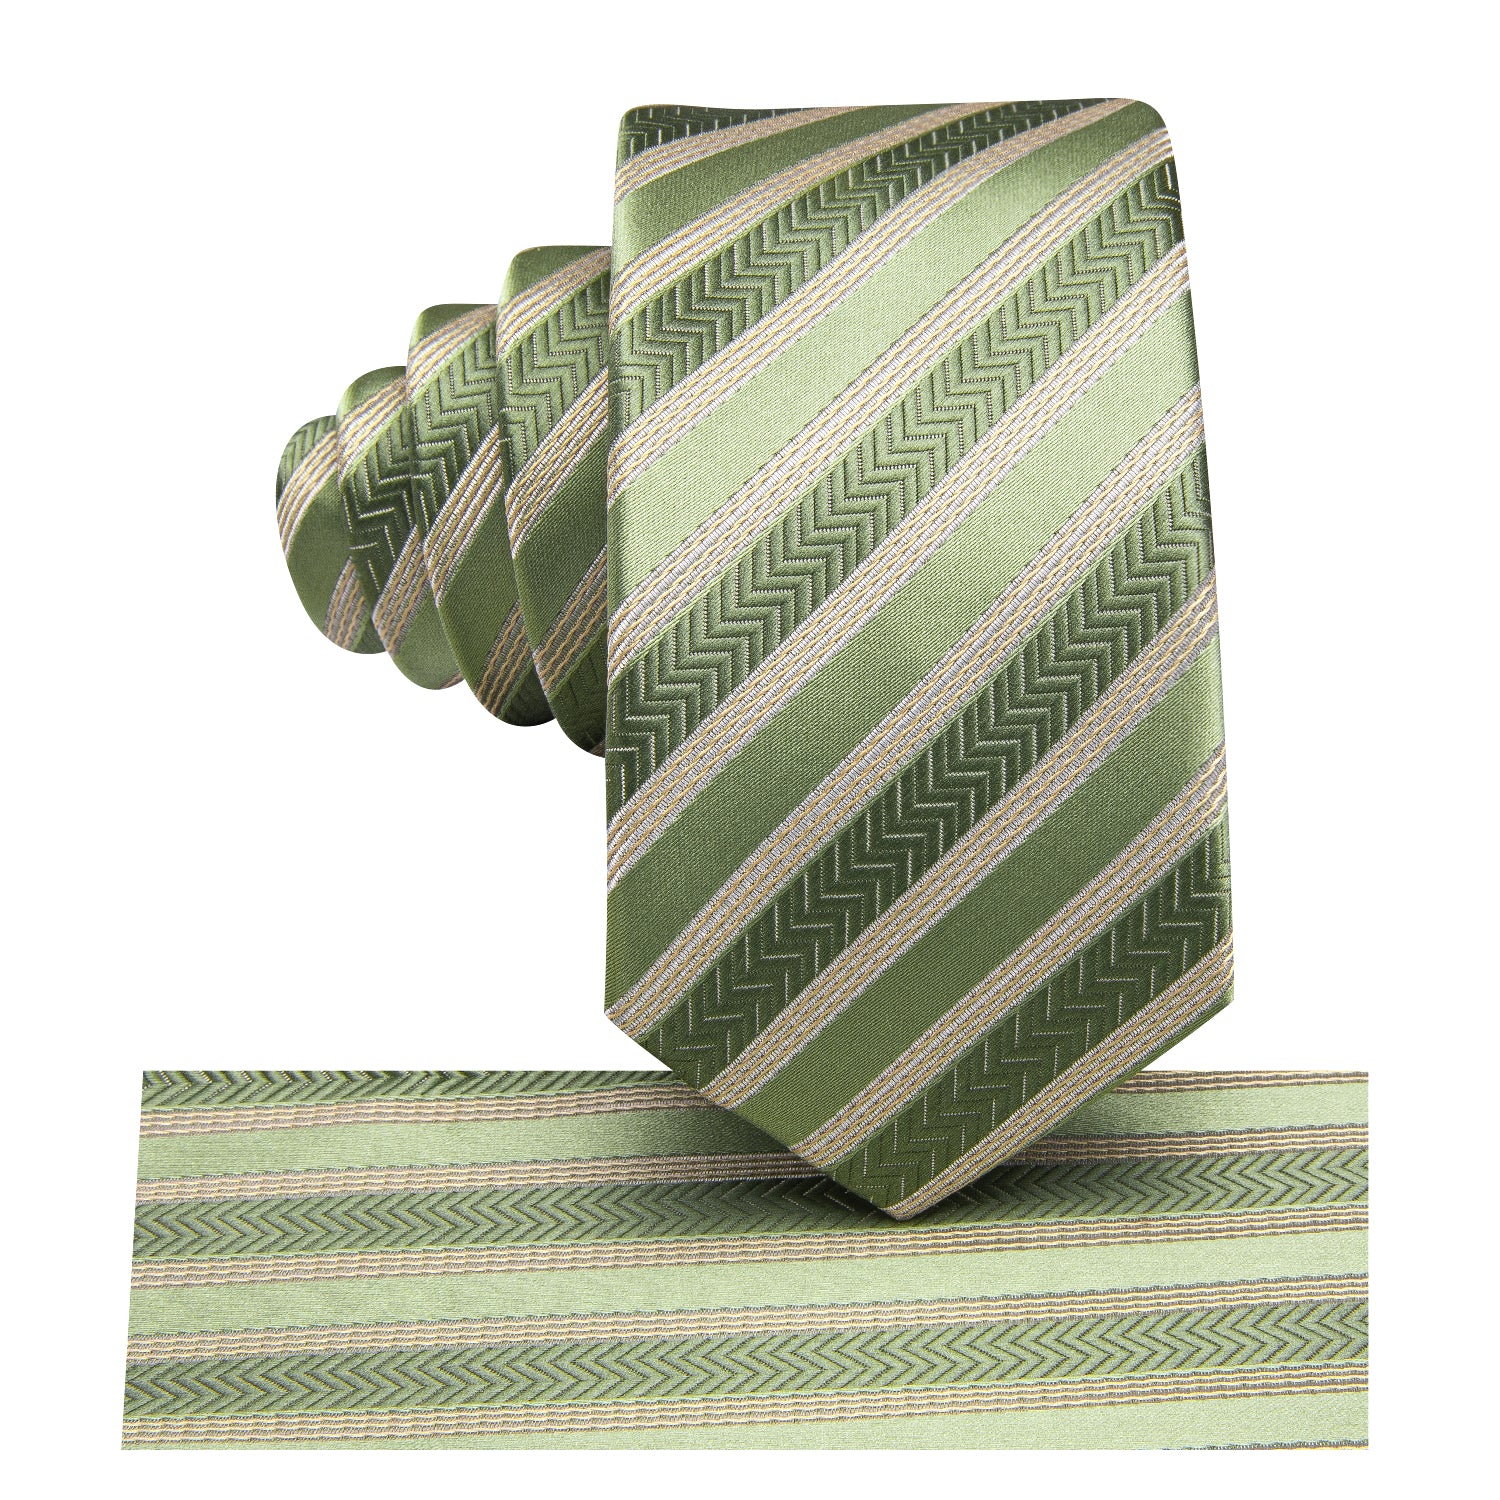 Grass Green Striped Children's Tie Pocket Square